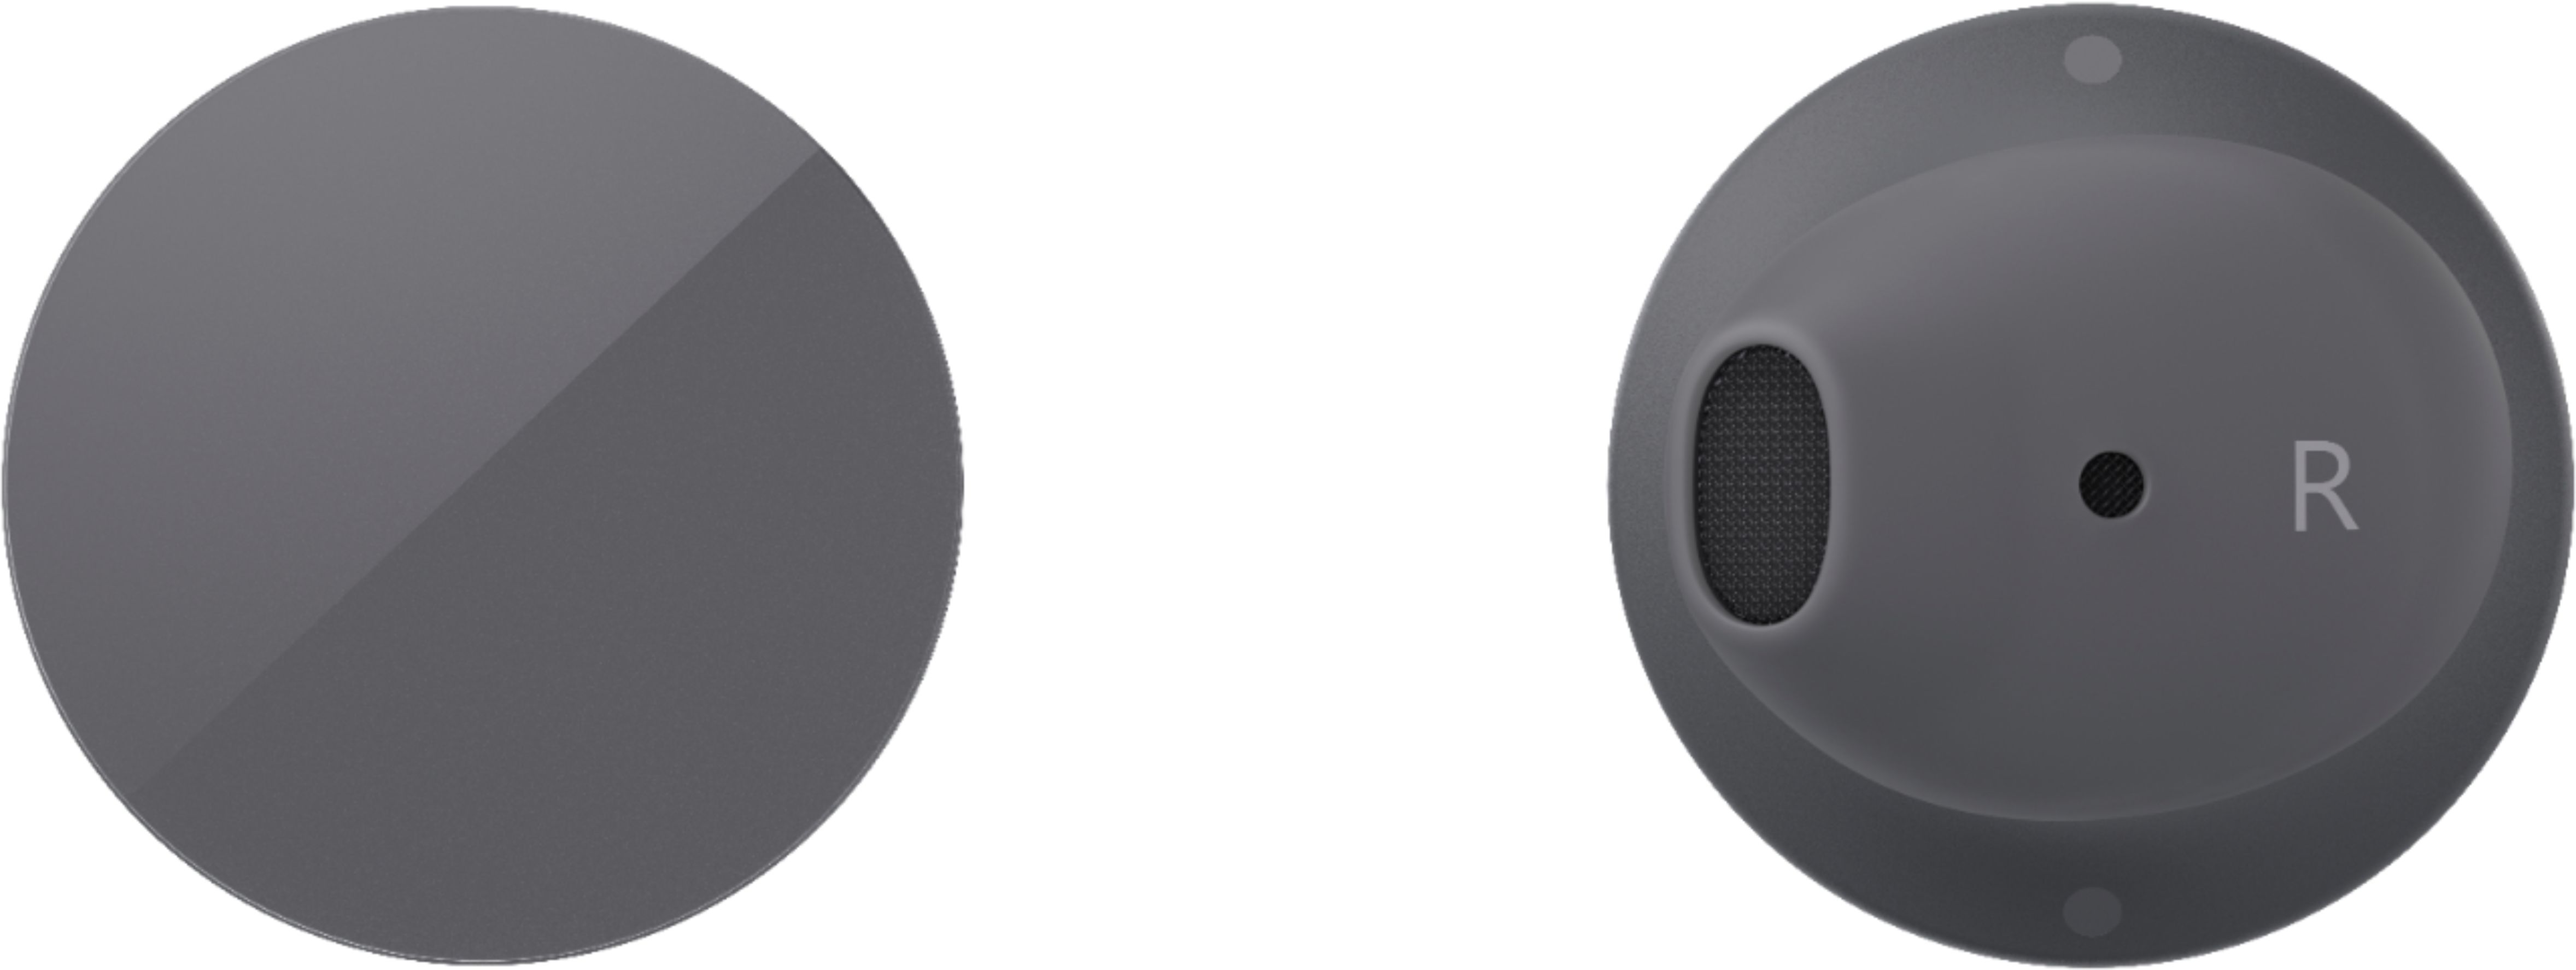 Microsoft Surface Wireless Bluetooth Earbuds - Graphite